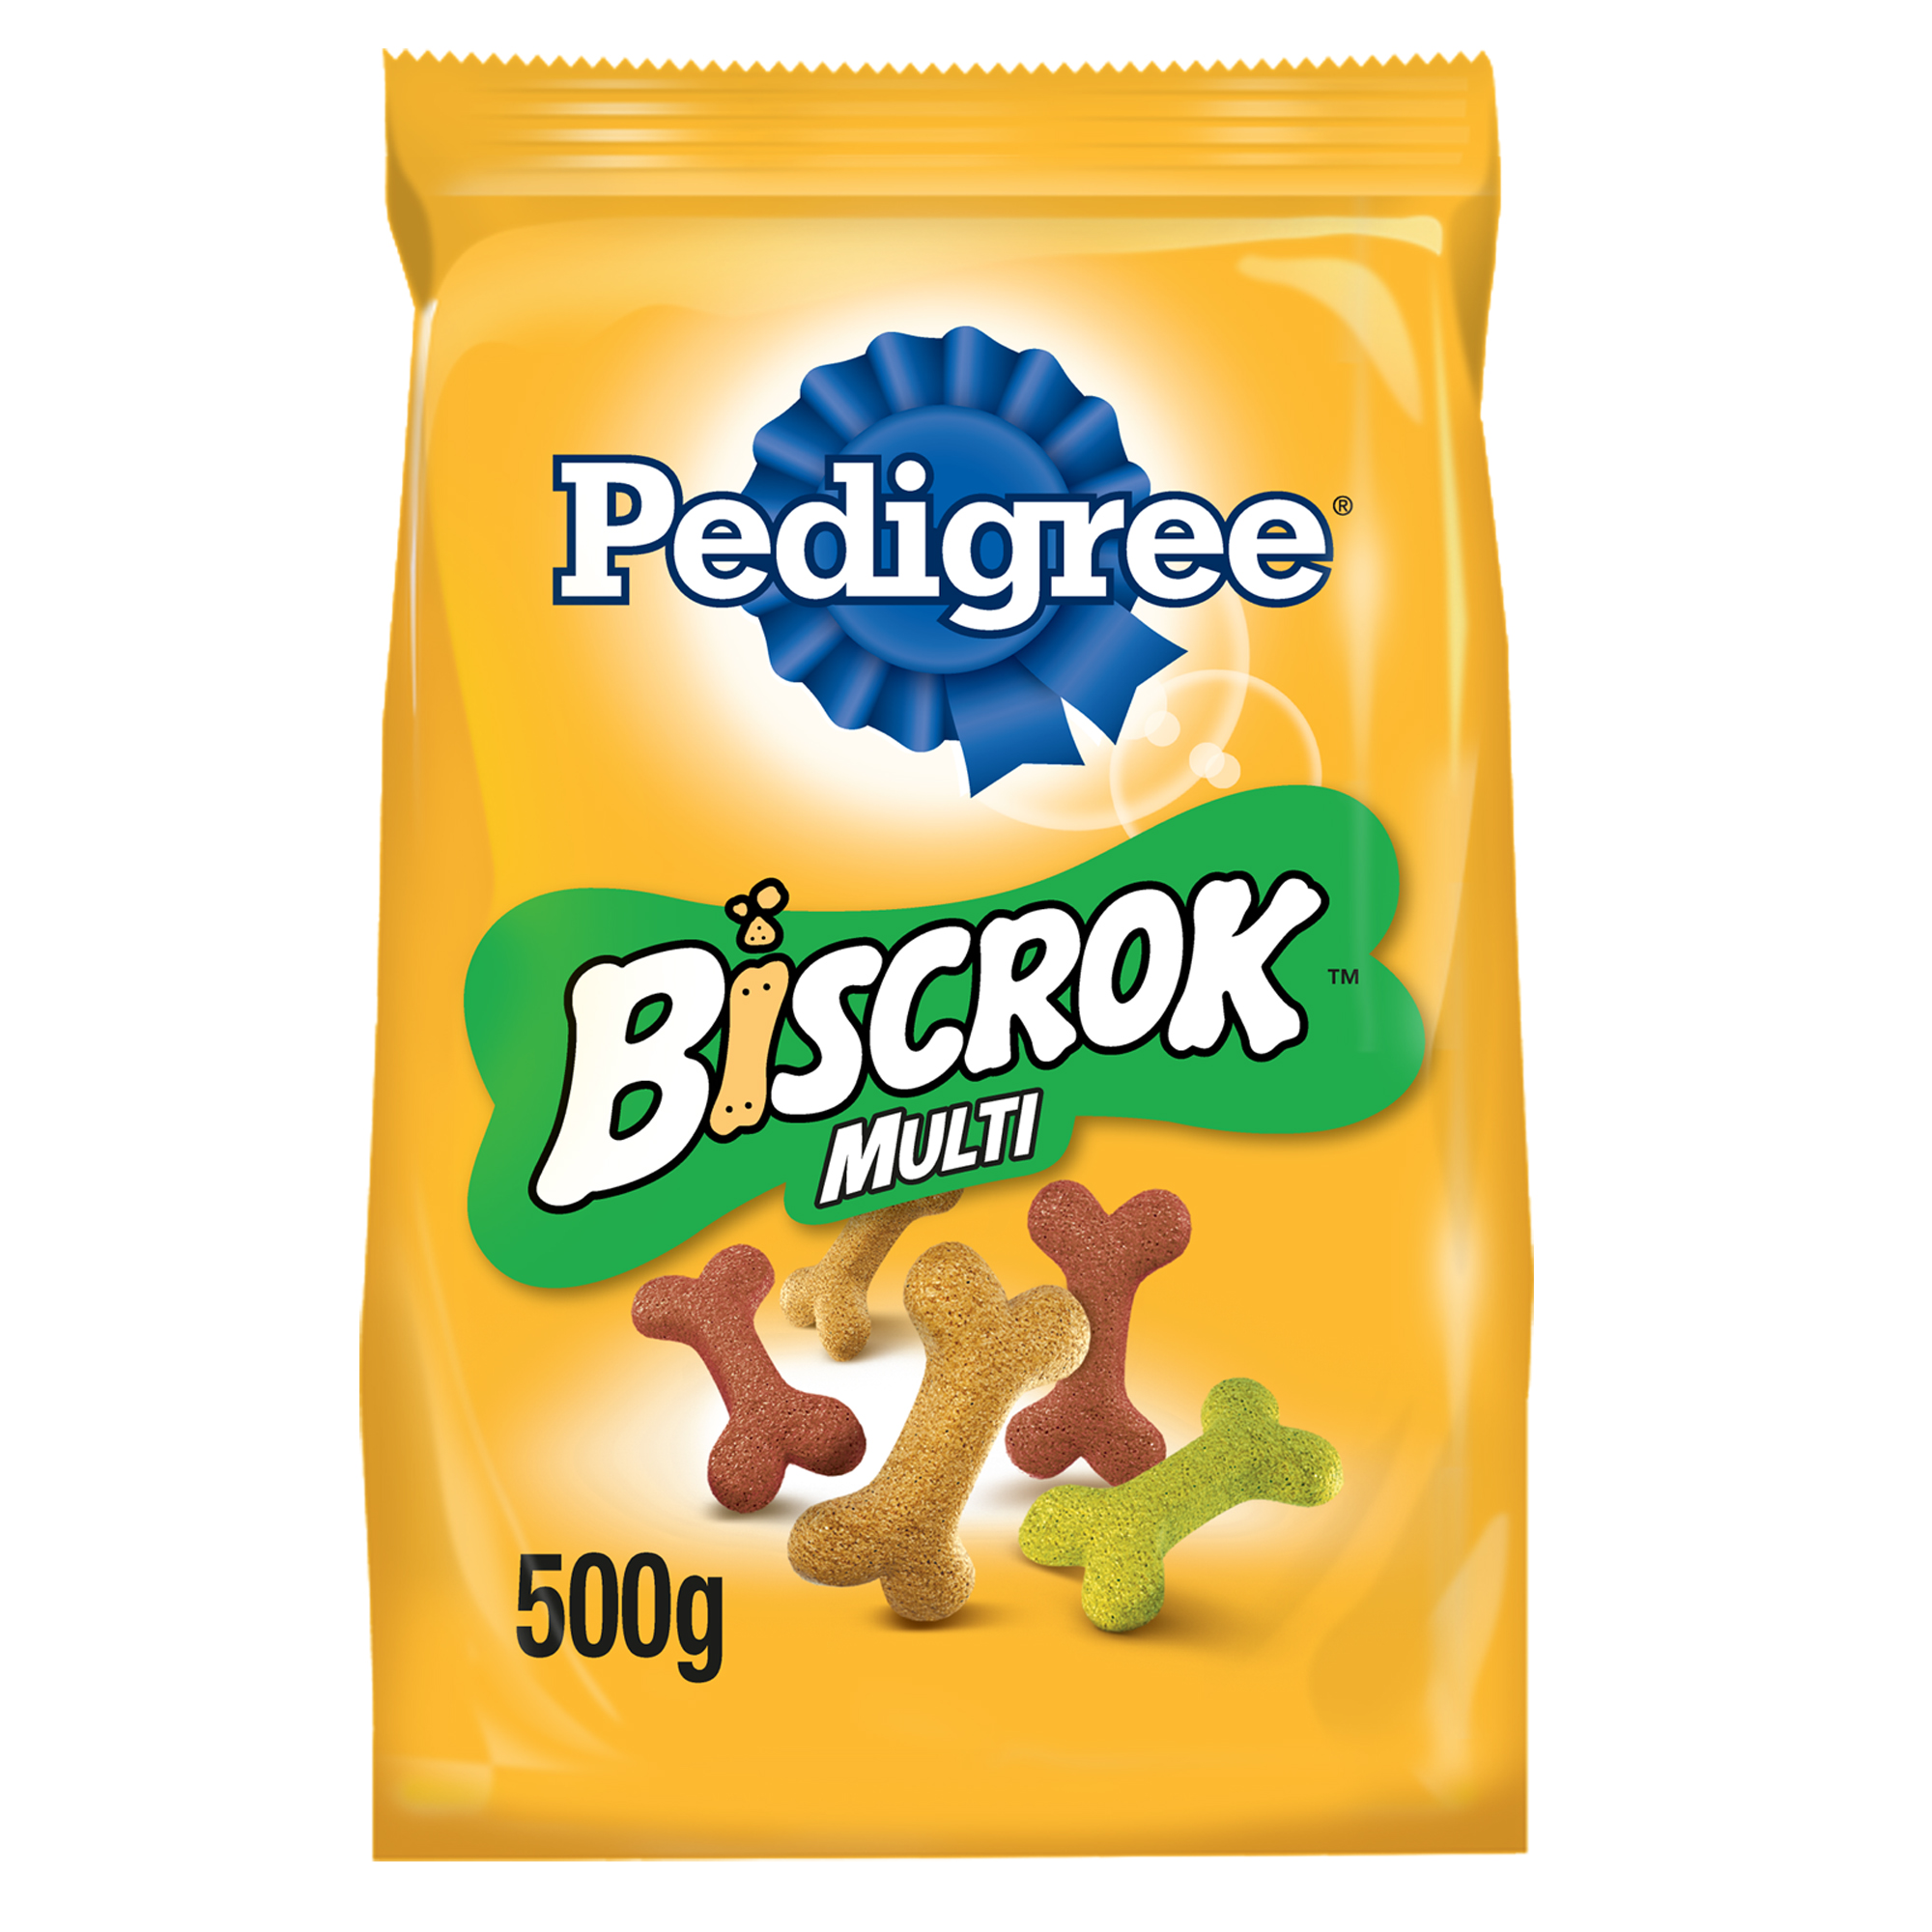 Pedigree biscrok multi galletas adultos (bolsa 500 g)